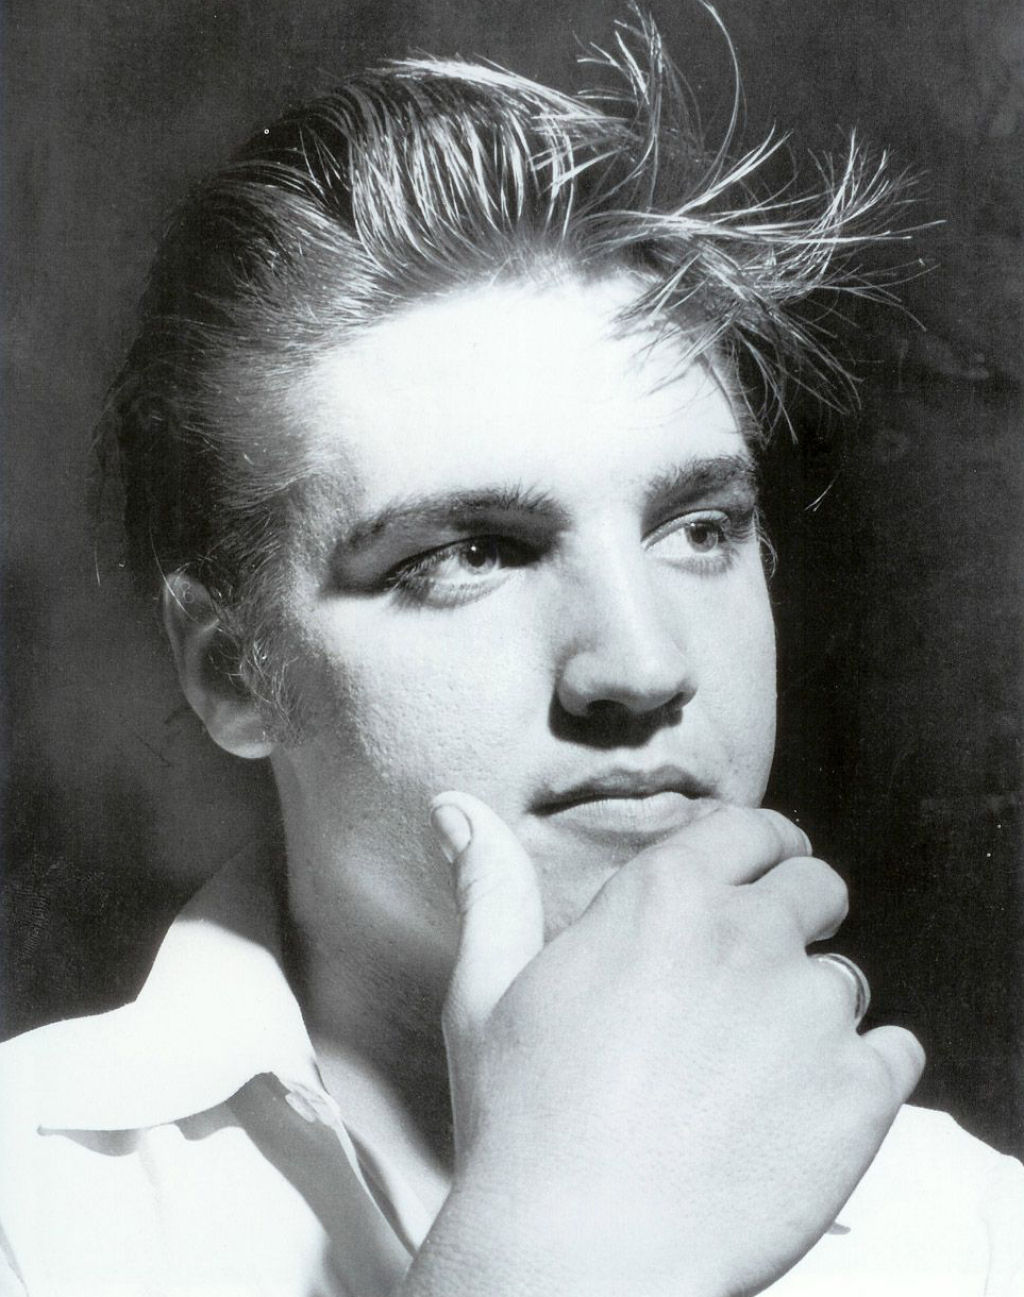 Fotos antigas de Elvis Presley mostram que ele era realmente loiro 08